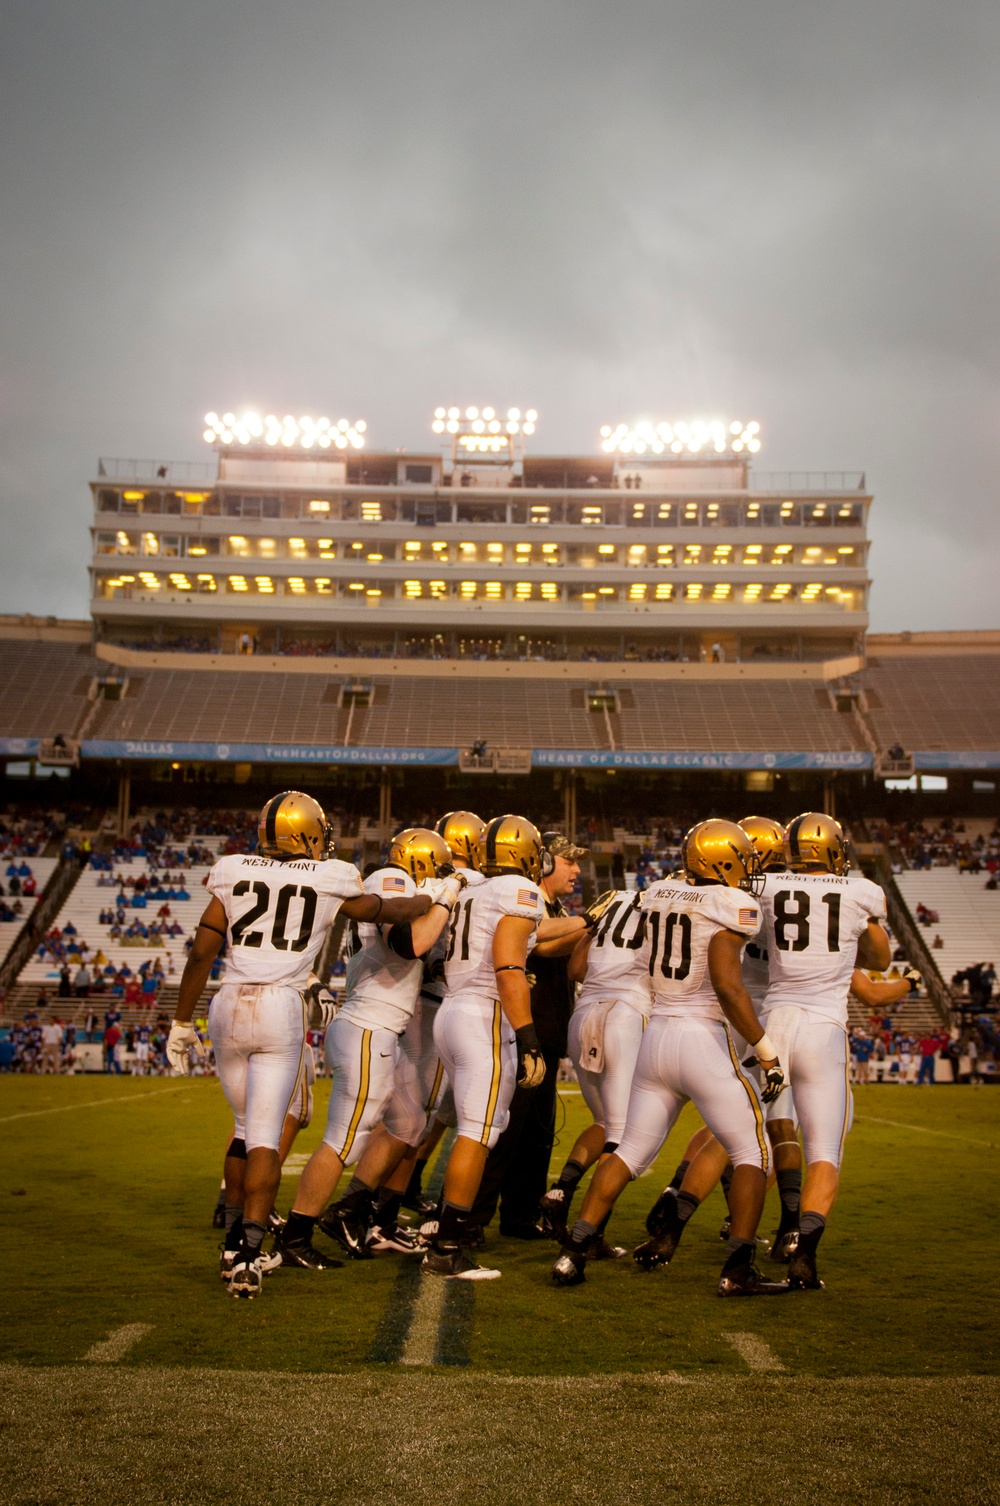 West Point football at rainy Cotton Bowl Stadium